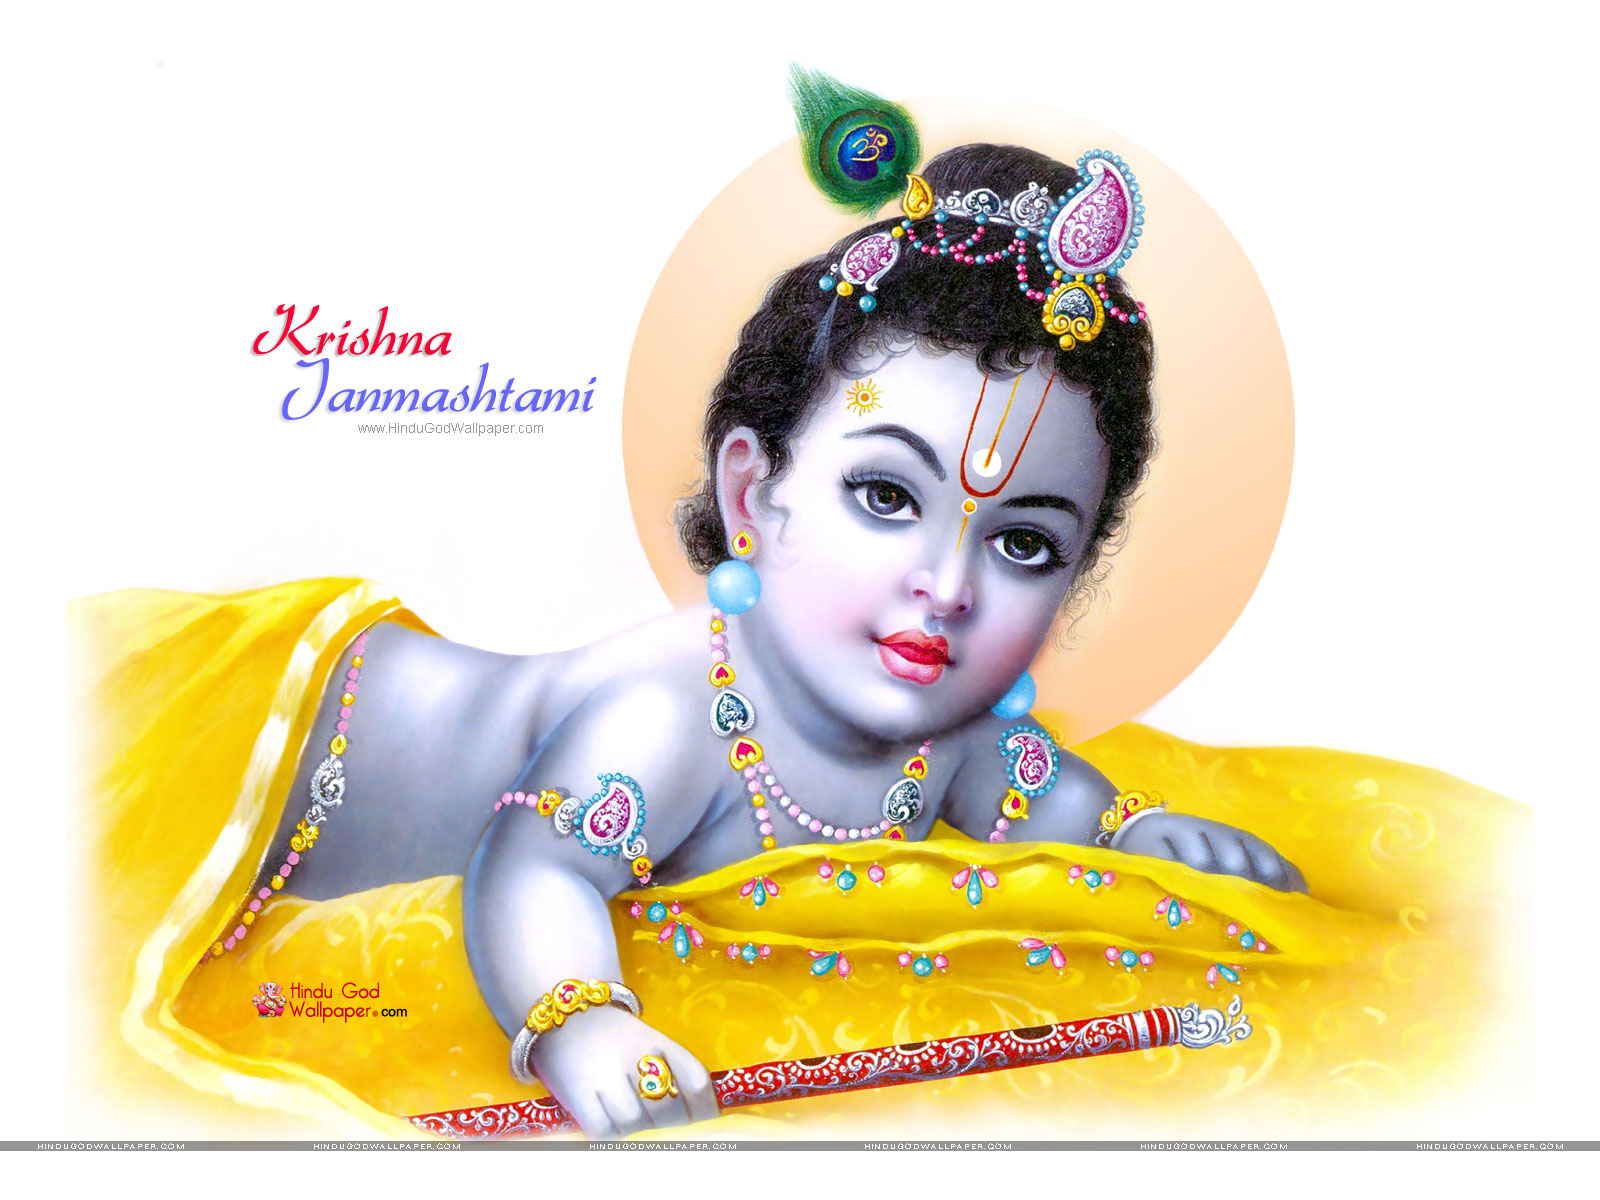 Happy Krishna Janmashtami 2019 - HD Wallpaper 